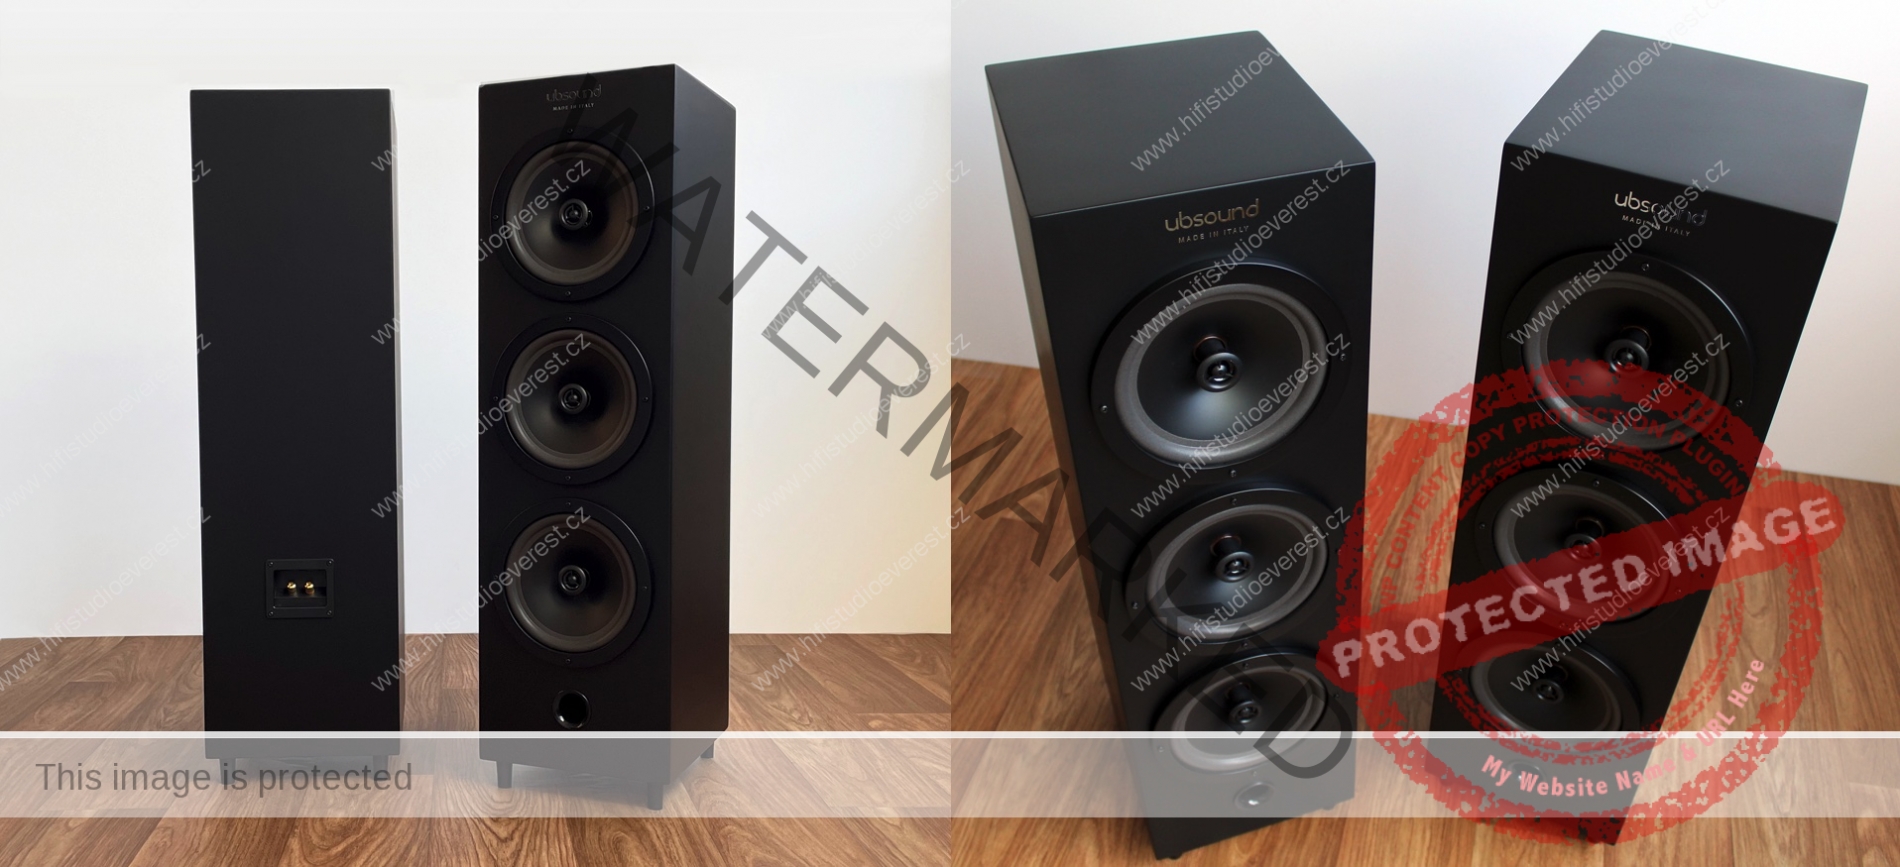 ubsound-m75-pair-of-speakers